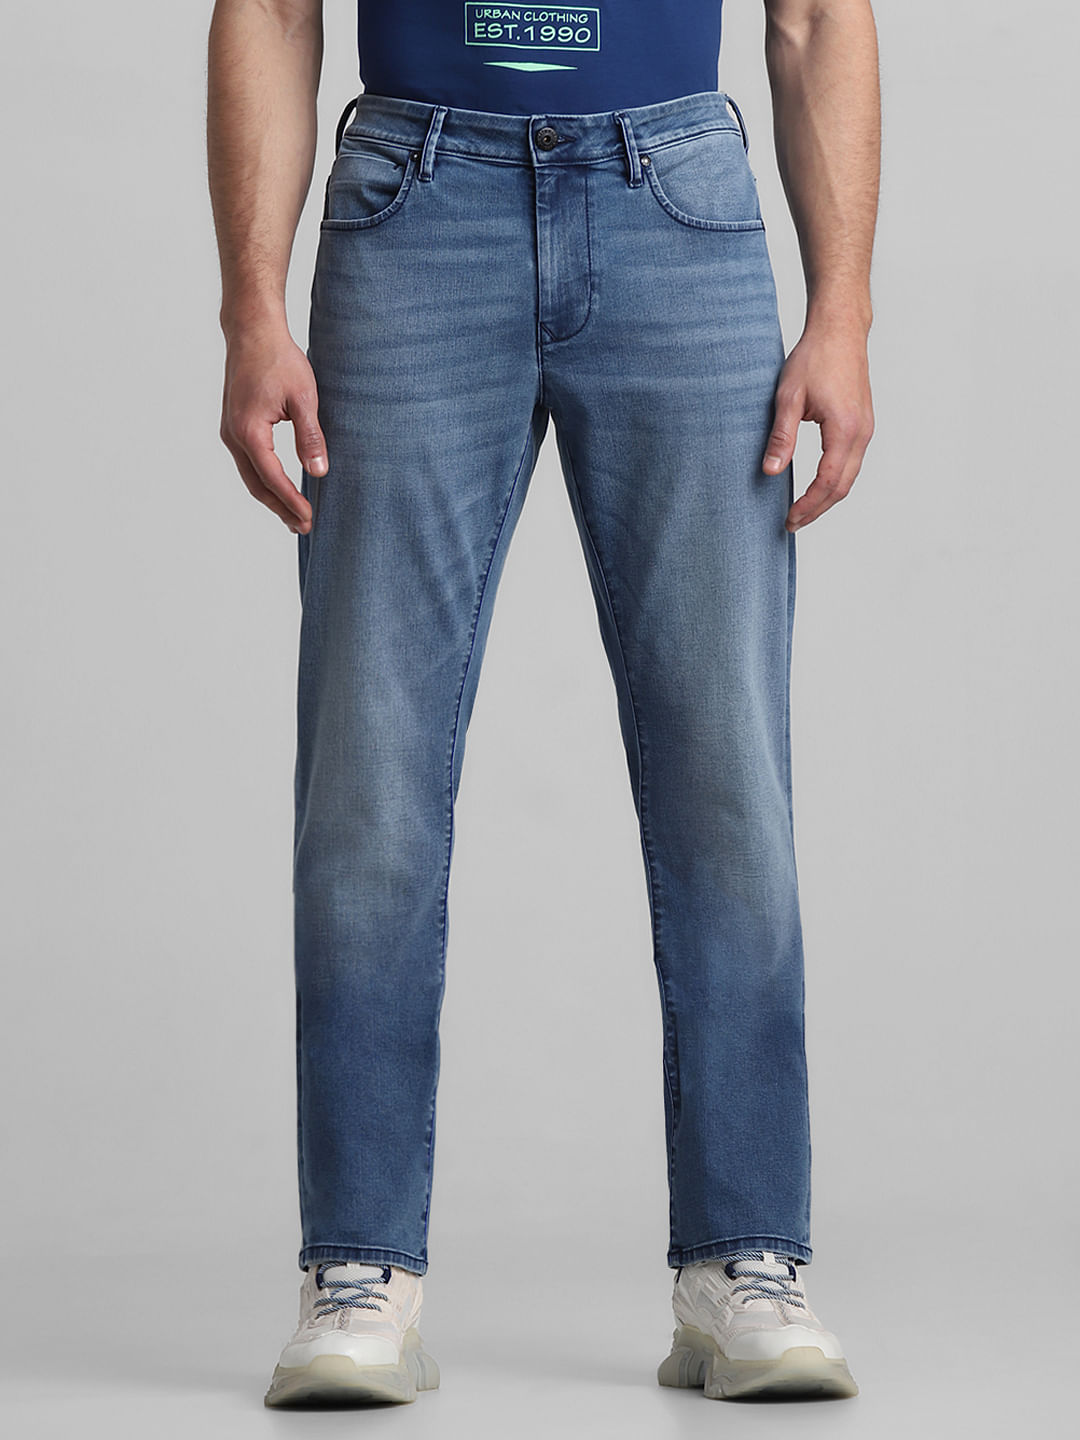 Buy Men Blue Skinny Fit Light Wash Jeans Online - 749202 | Allen Solly